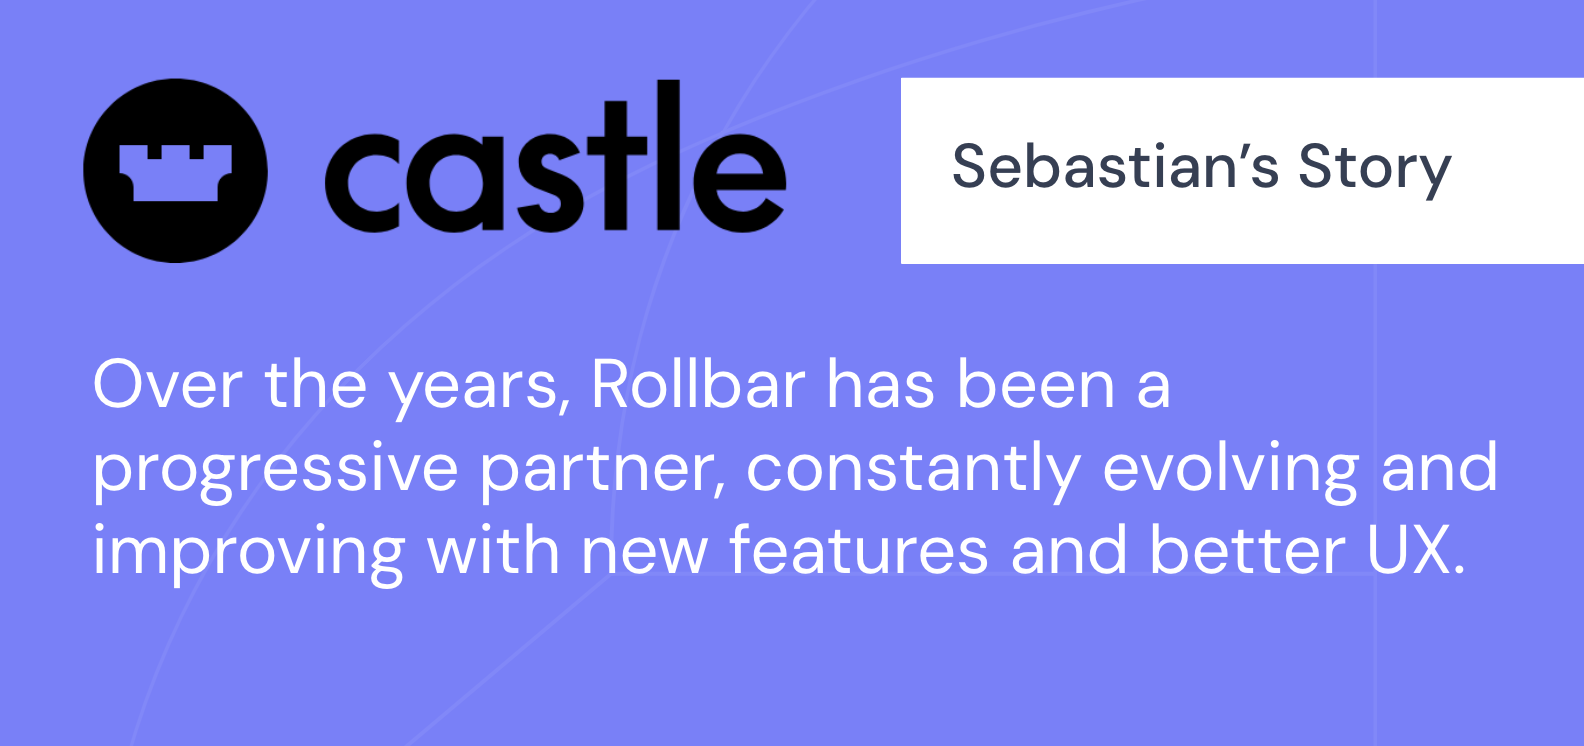 Sebastian’s story with Rollbar